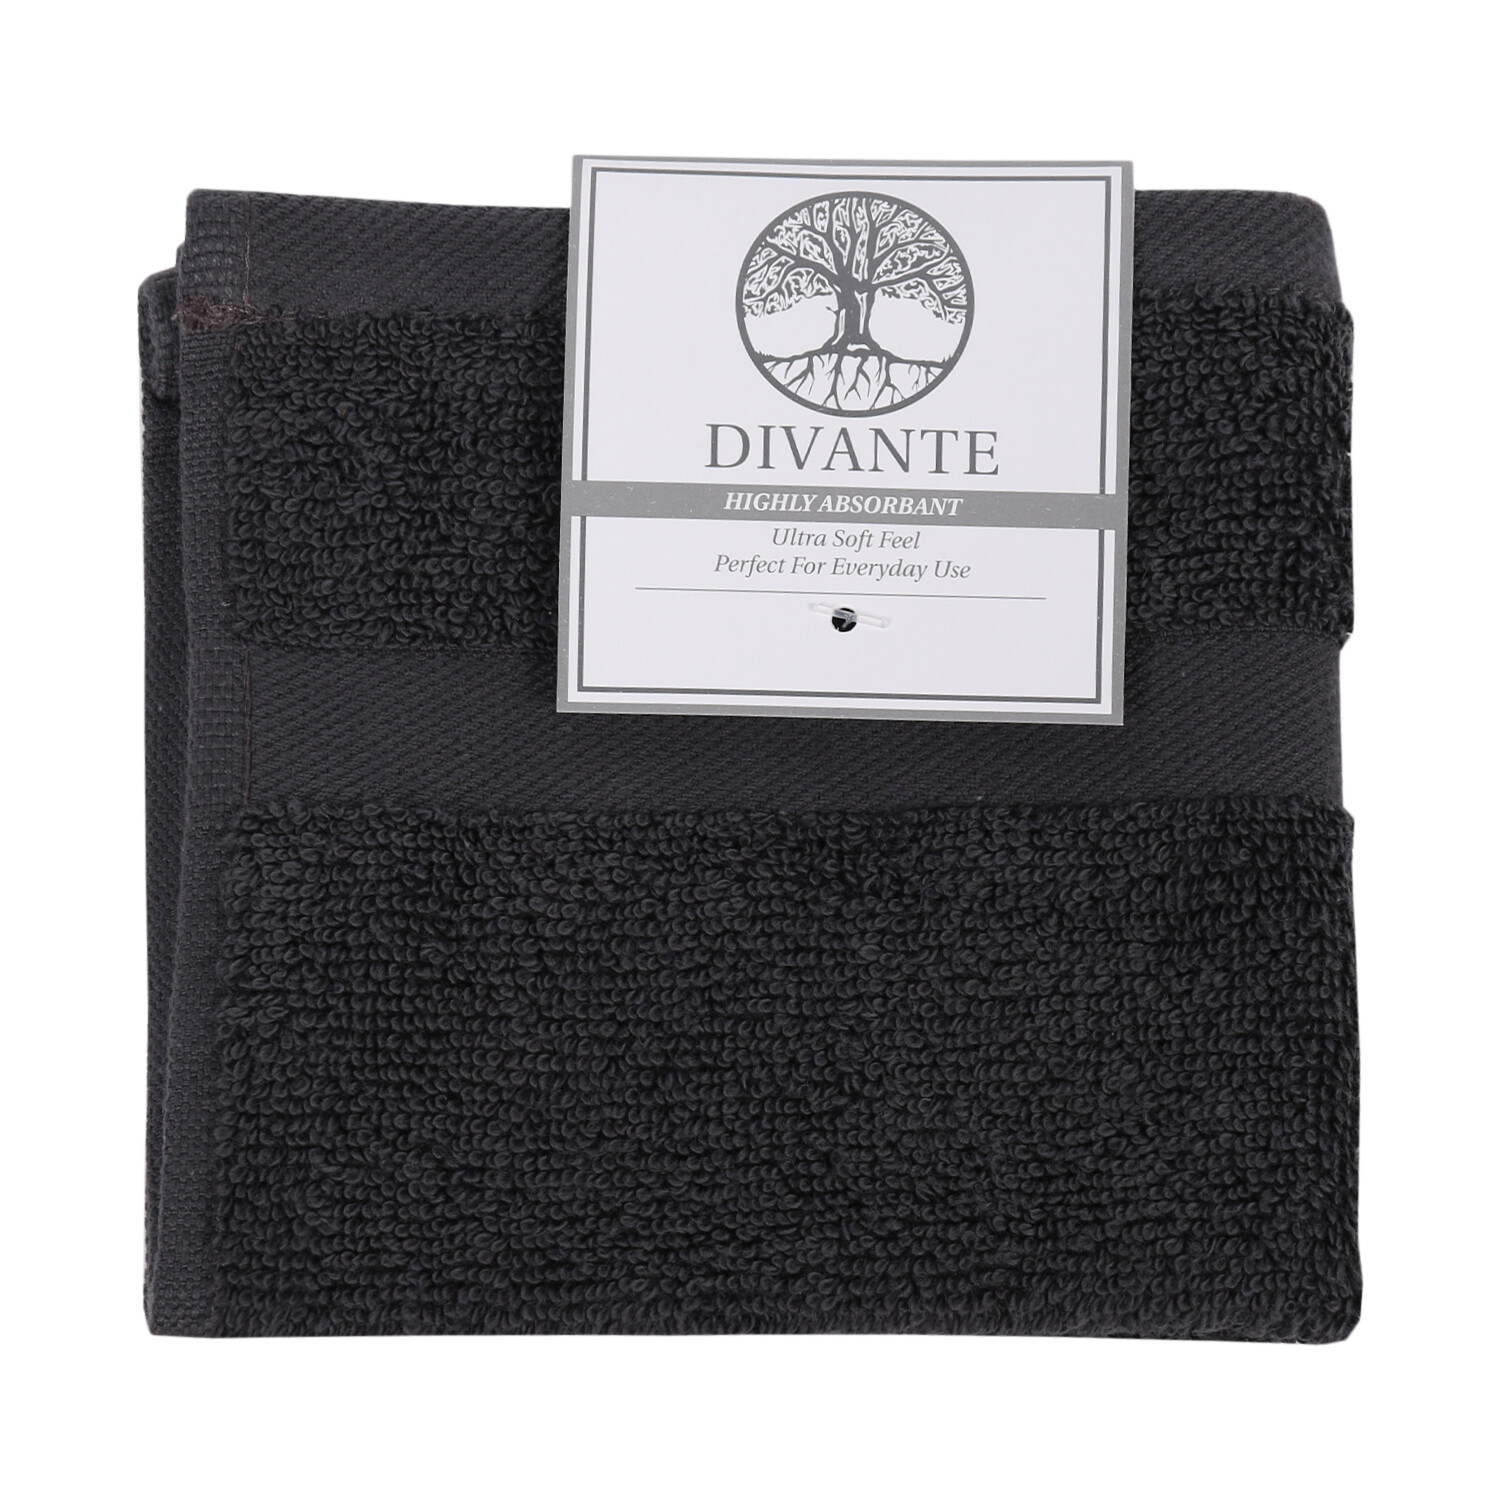 Divante Flannel Face Cloth - Dark Grey Image 2